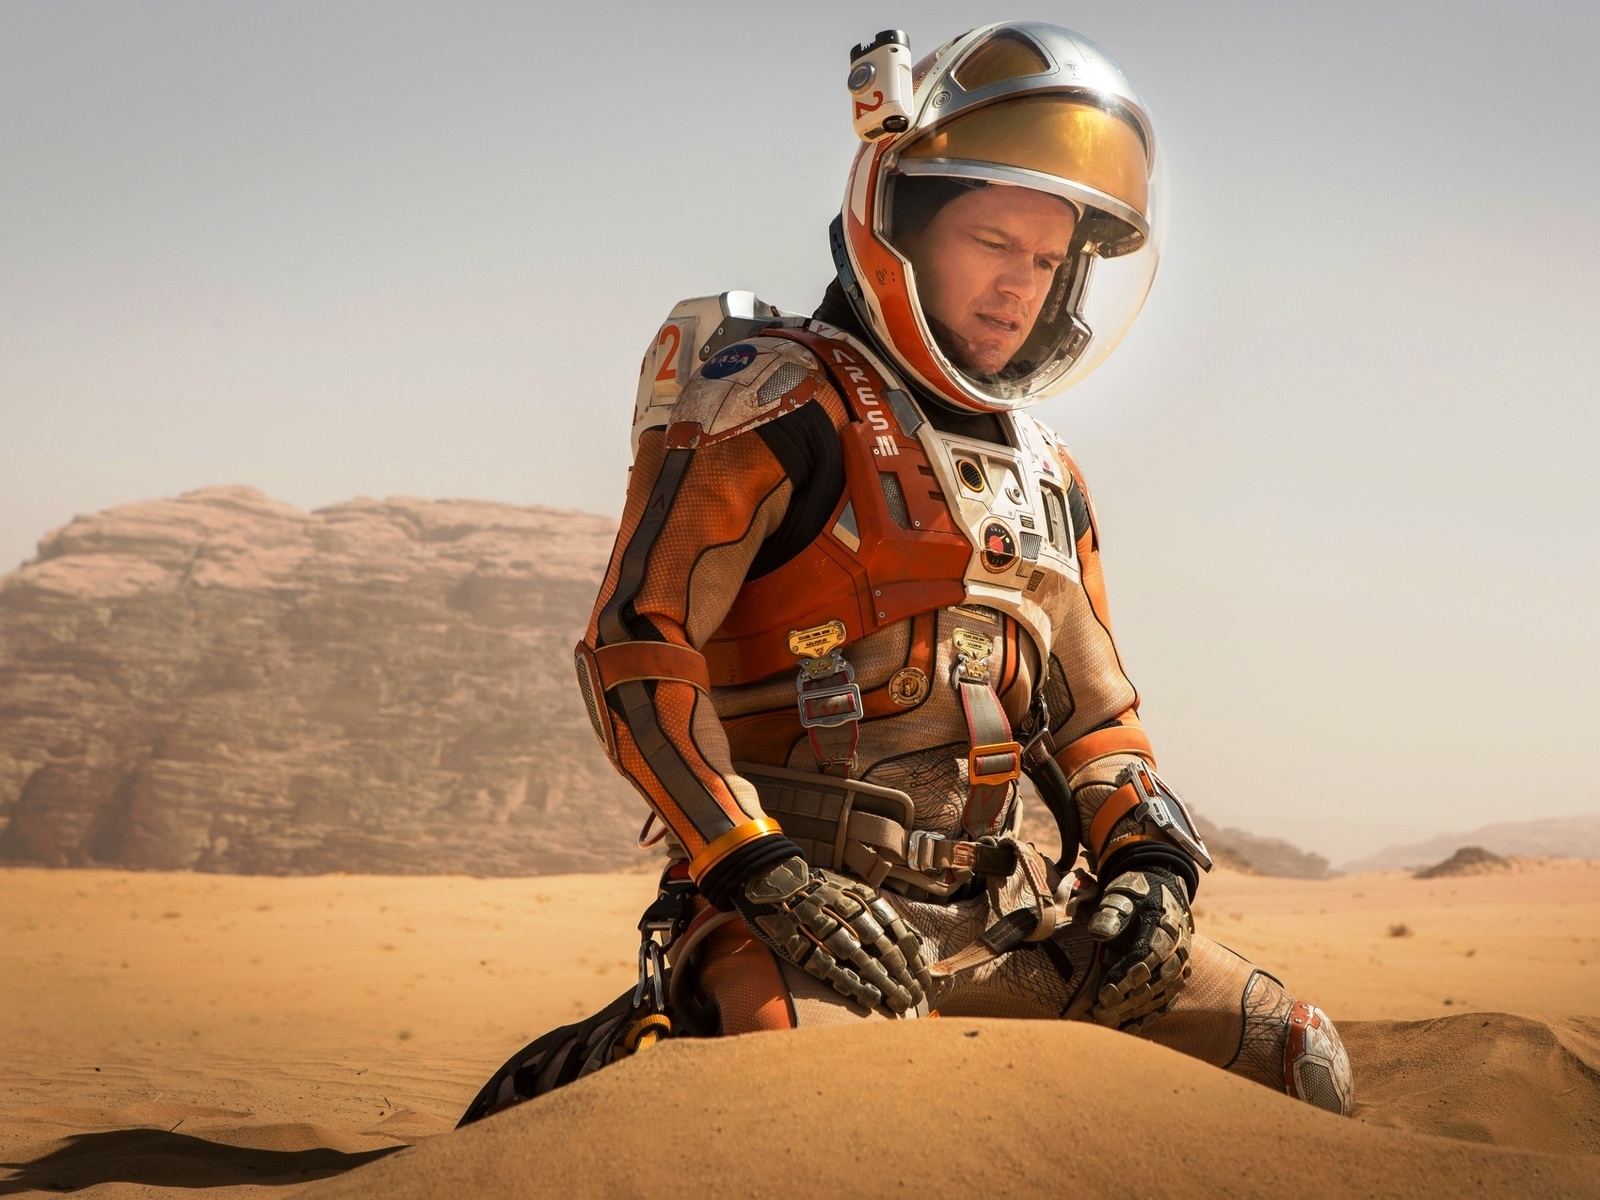 The Martian Matt Damon for 1600 x 1200 resolution